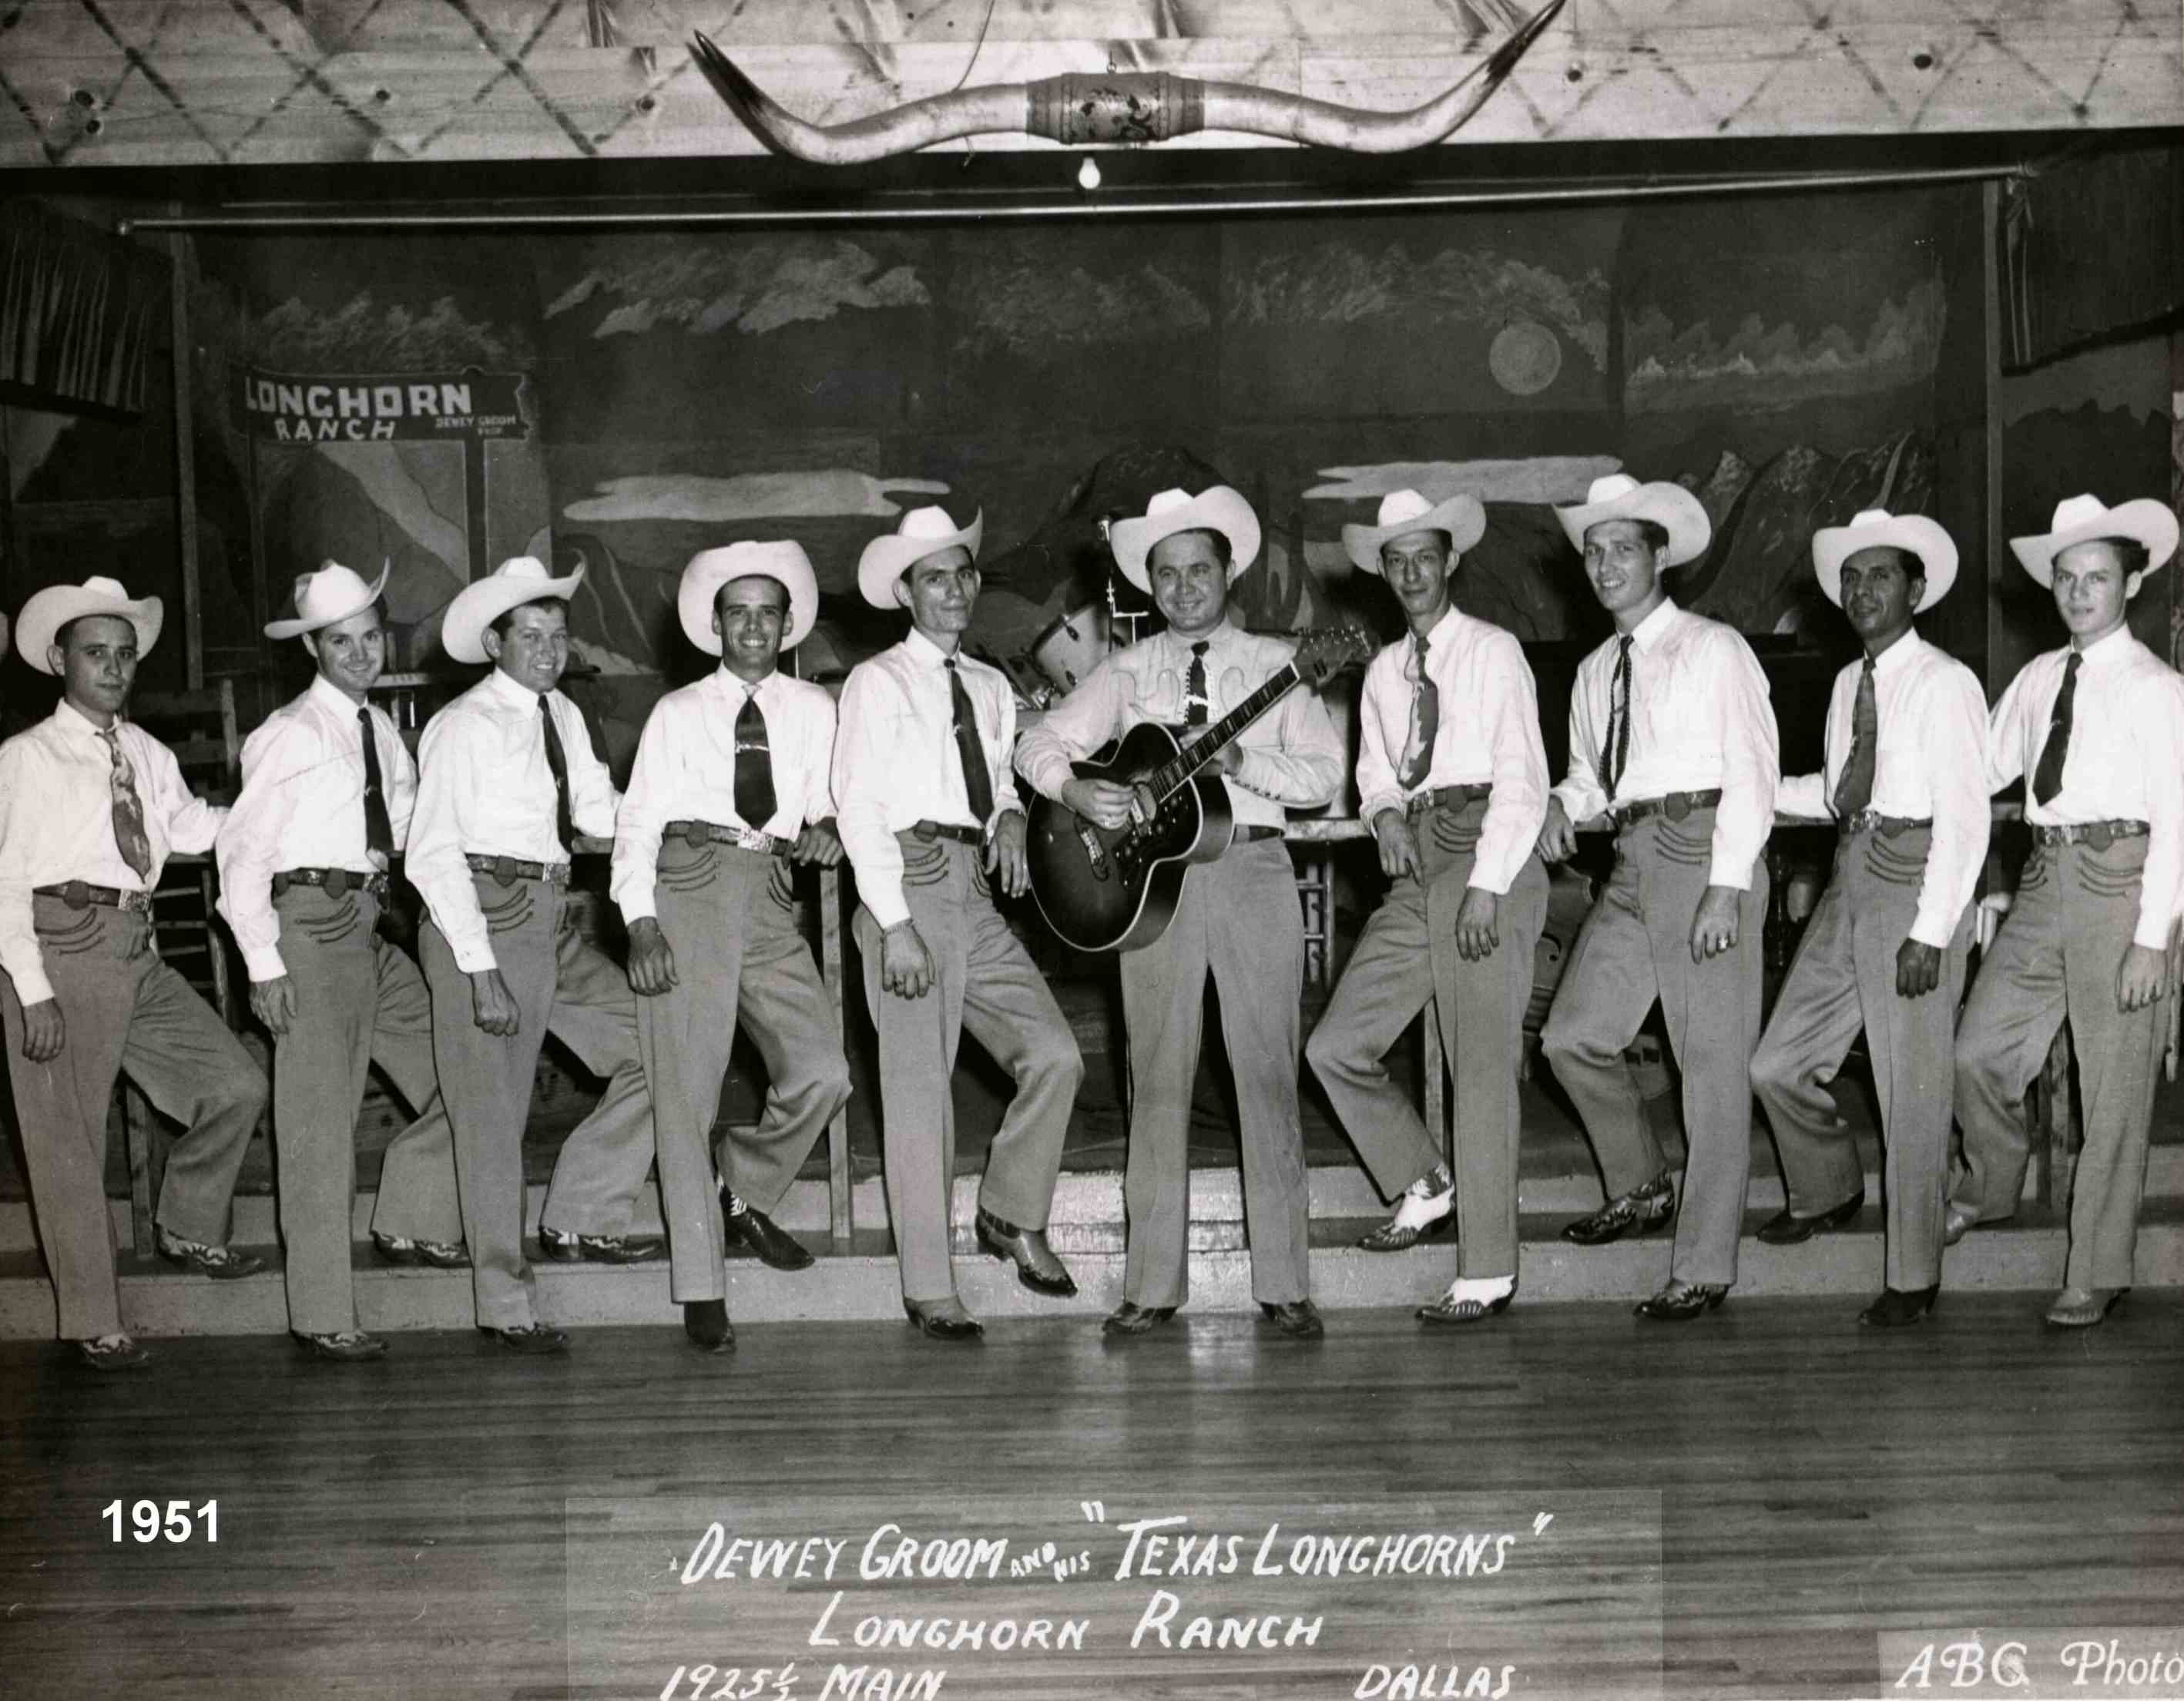 Dewey Groom and his Texas Longhorns